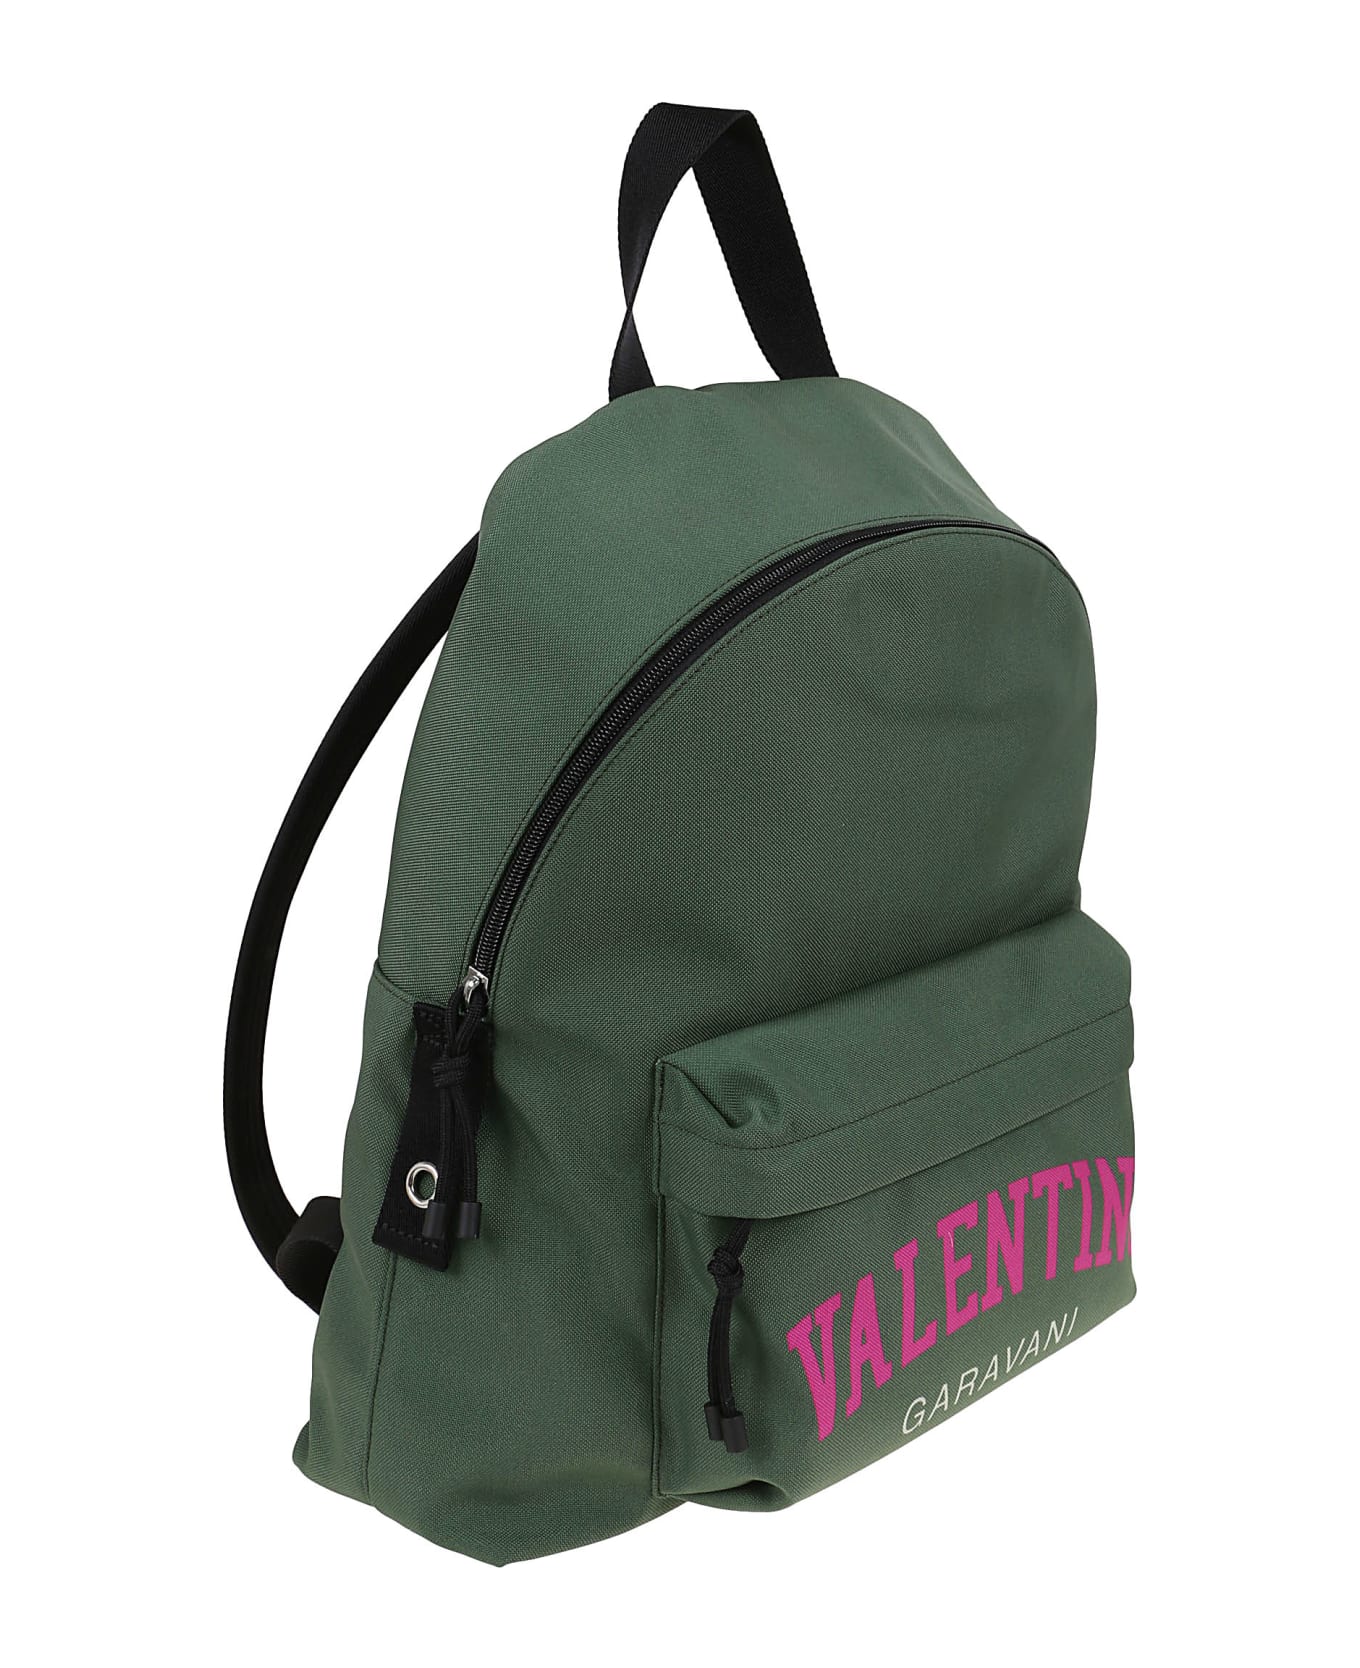 Valentino Garavani Backpack  University - Q Multicolor Verde Pink Pp